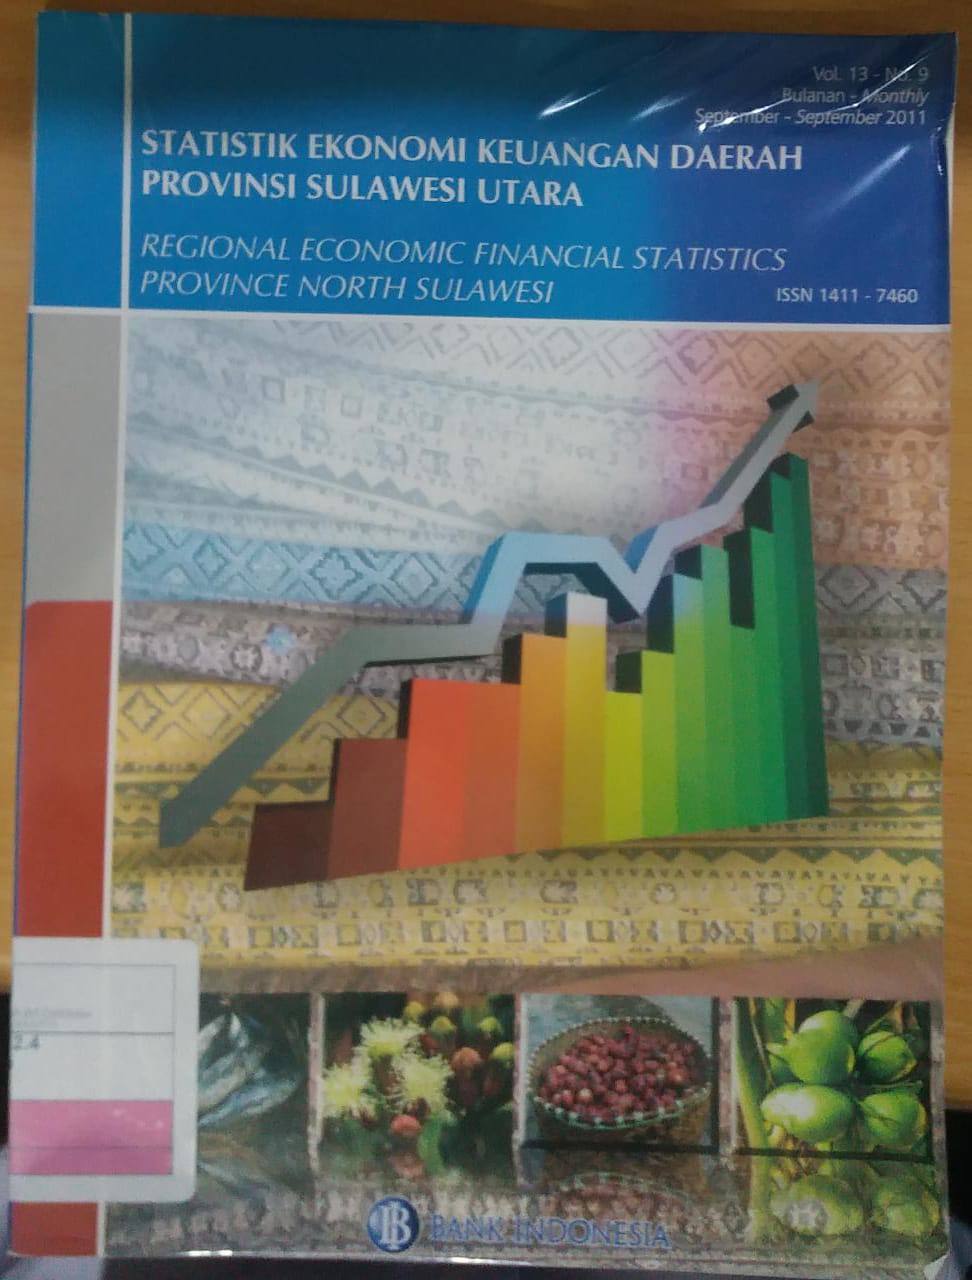 Statistik Ekonomi Keuangan Daerah Provinsi Sulawesi Utara Vol 13 No, 06 = :  Regional Economic Financial Statistics Province North Sulawesi